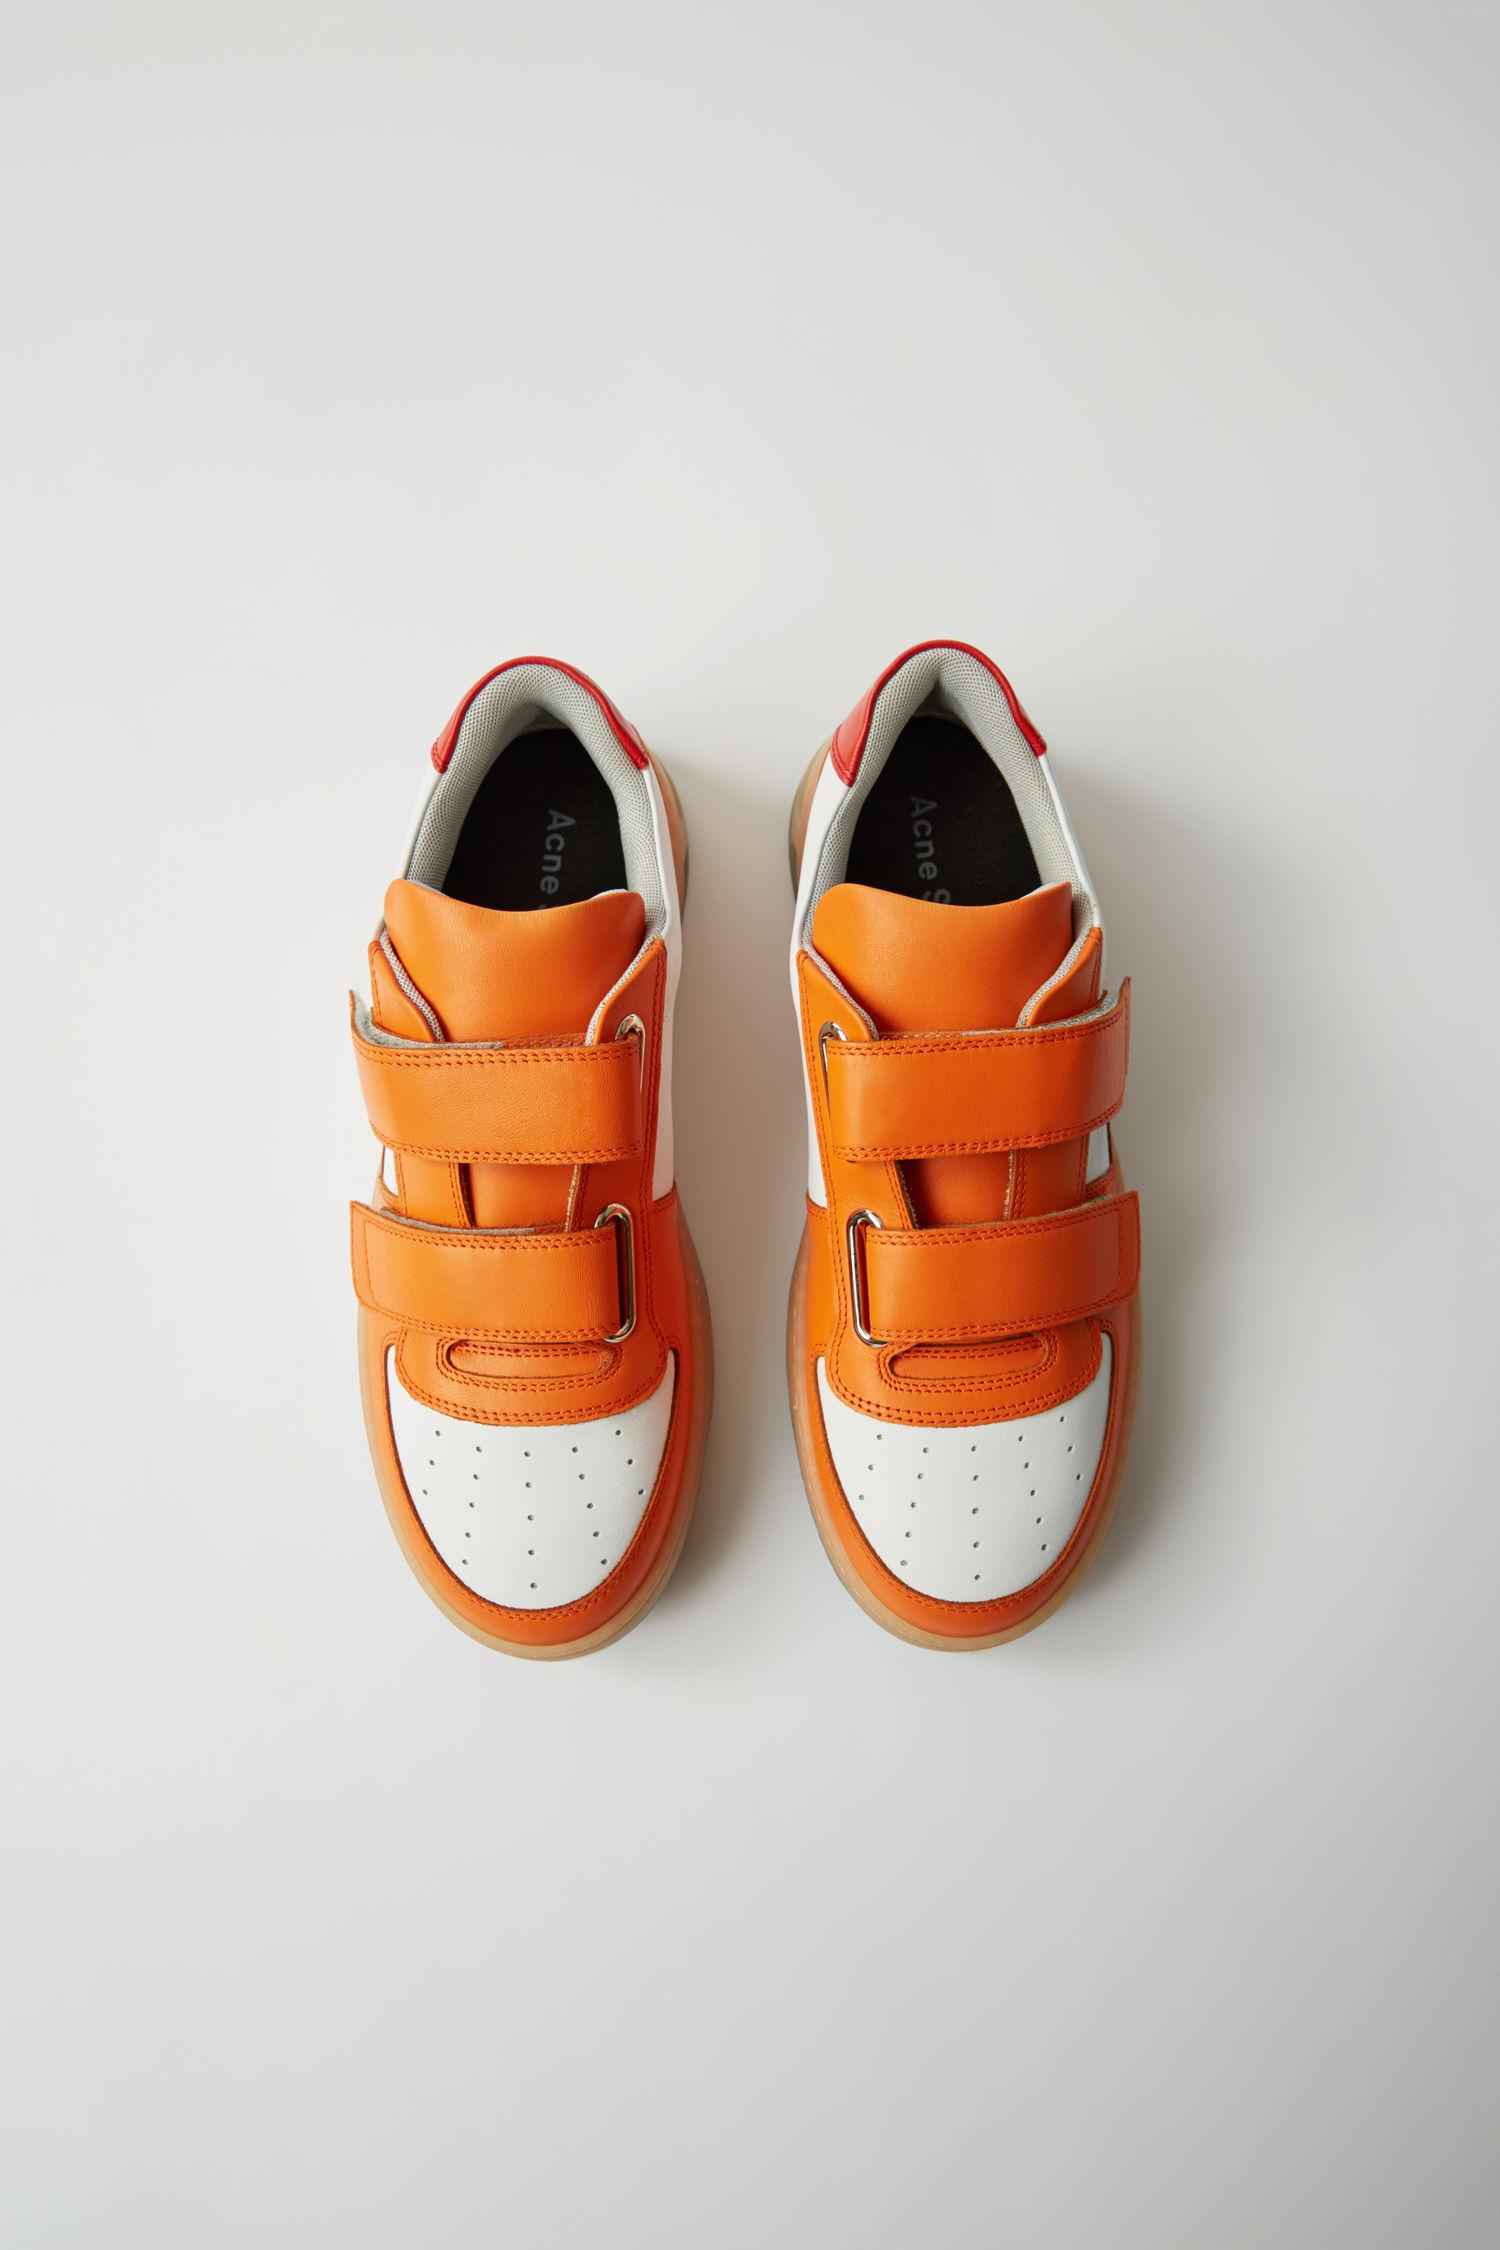 Acne Studios Branded Velcro Sneakers White/orange | ModeSens